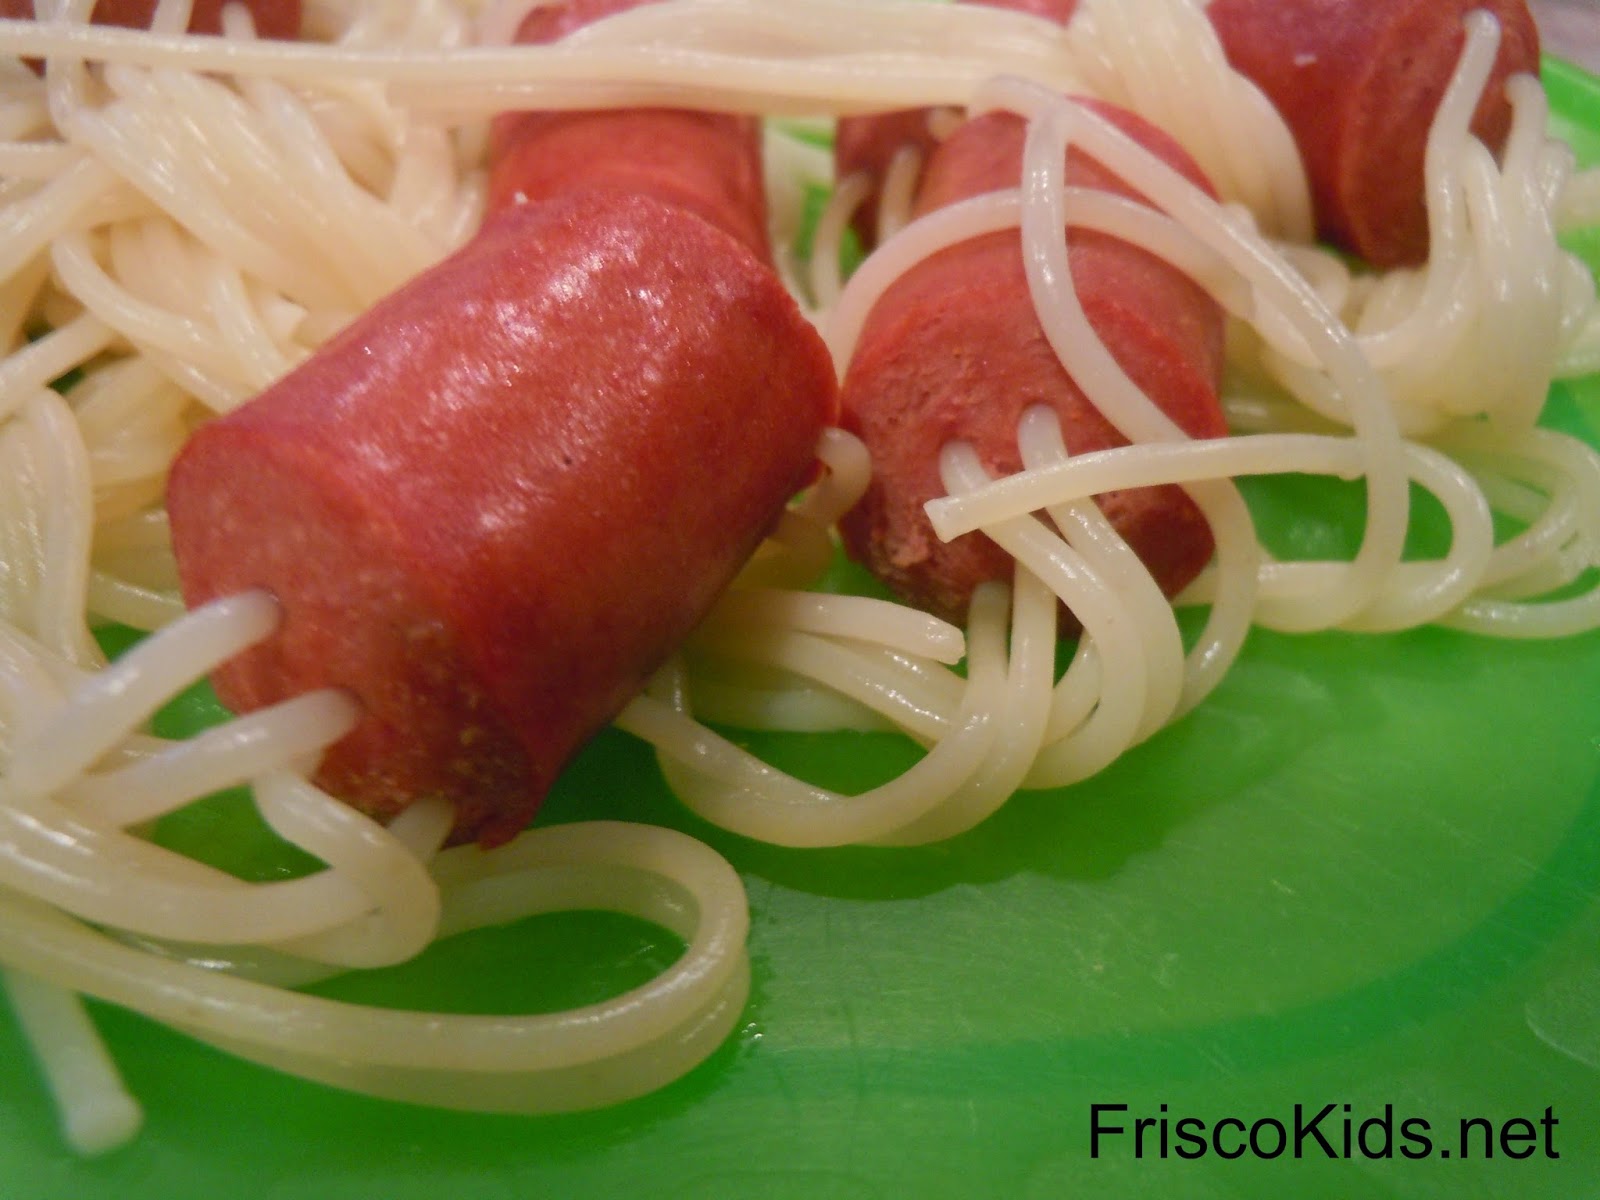 Frisco Kids: A weird meal to make: pasta dogs